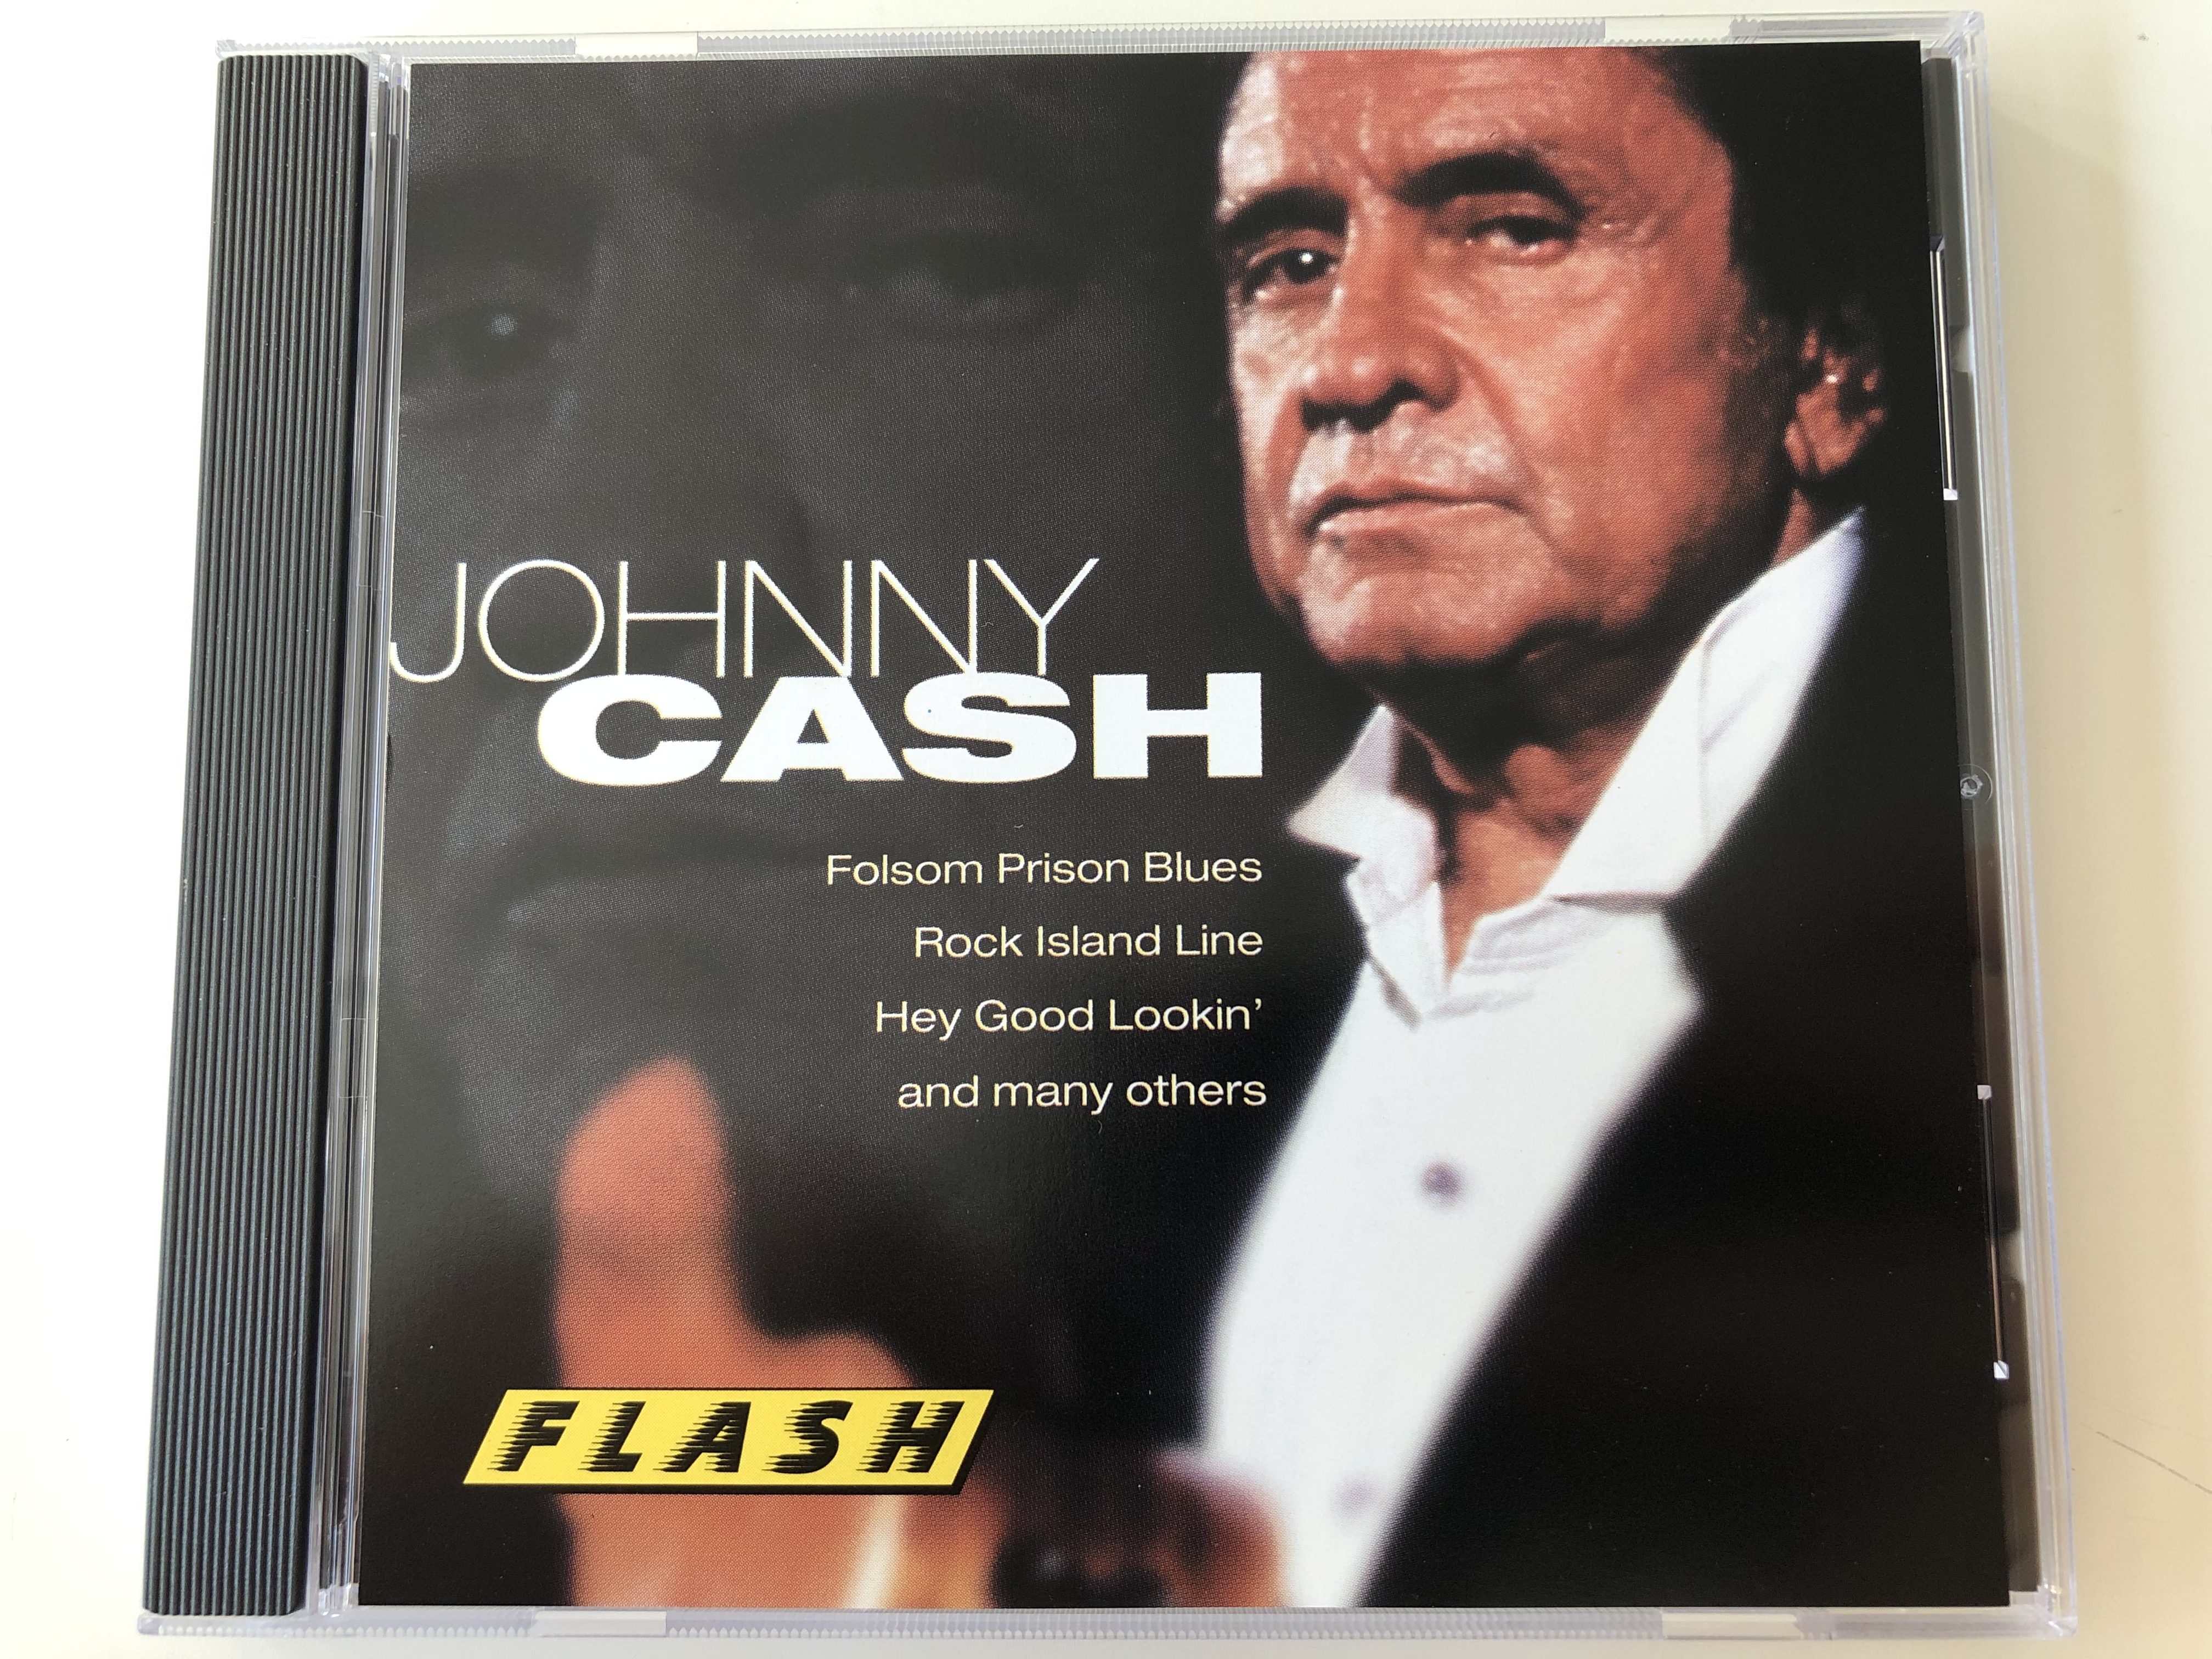 johnny-cash-folsom-prison-blues-rock-island-line-hey-good-lookin-and-many-more-flash-audio-cd-stereo-cdf-8835-2-1-.jpg